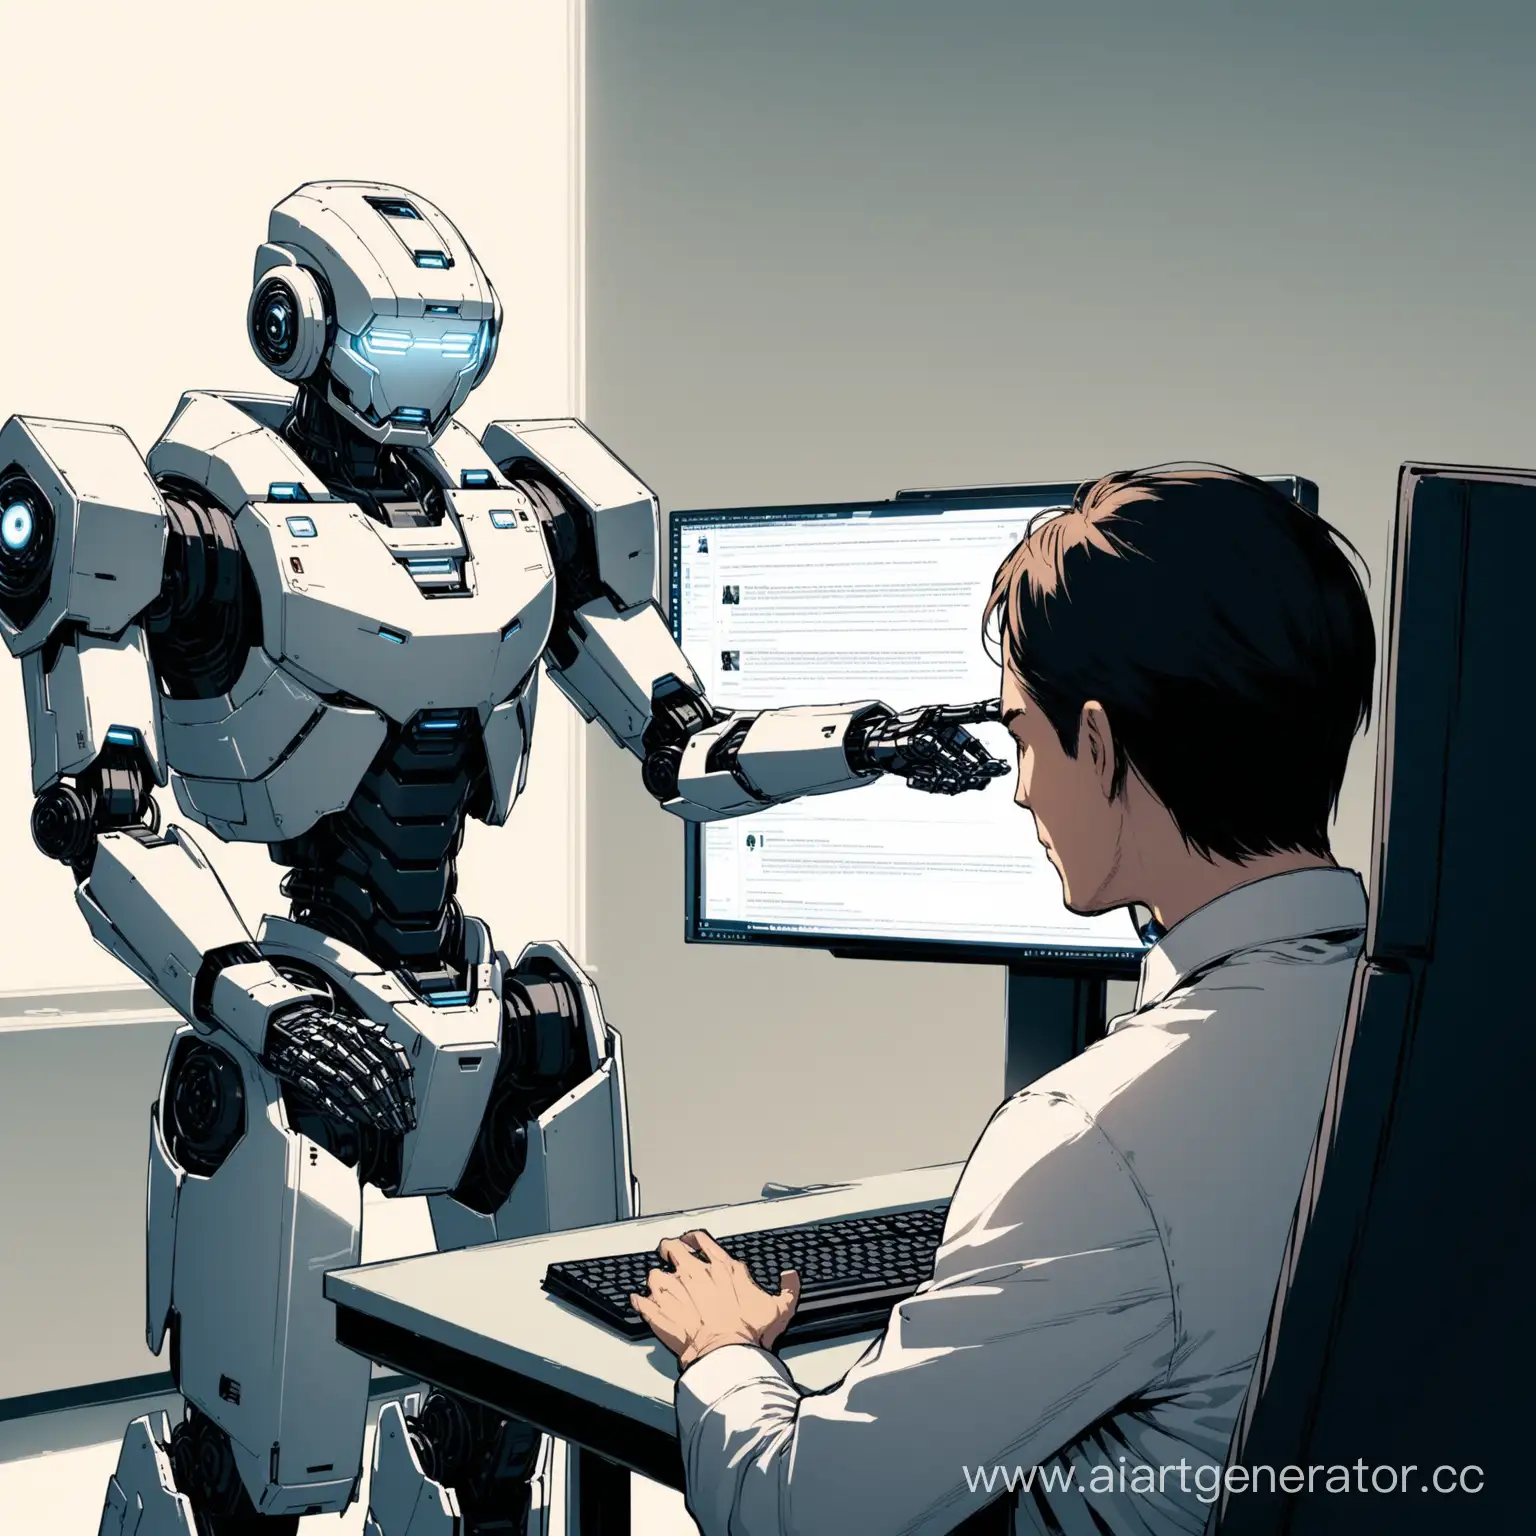 человек и робот сидят вместе и обсуждают текст на экране компьютера